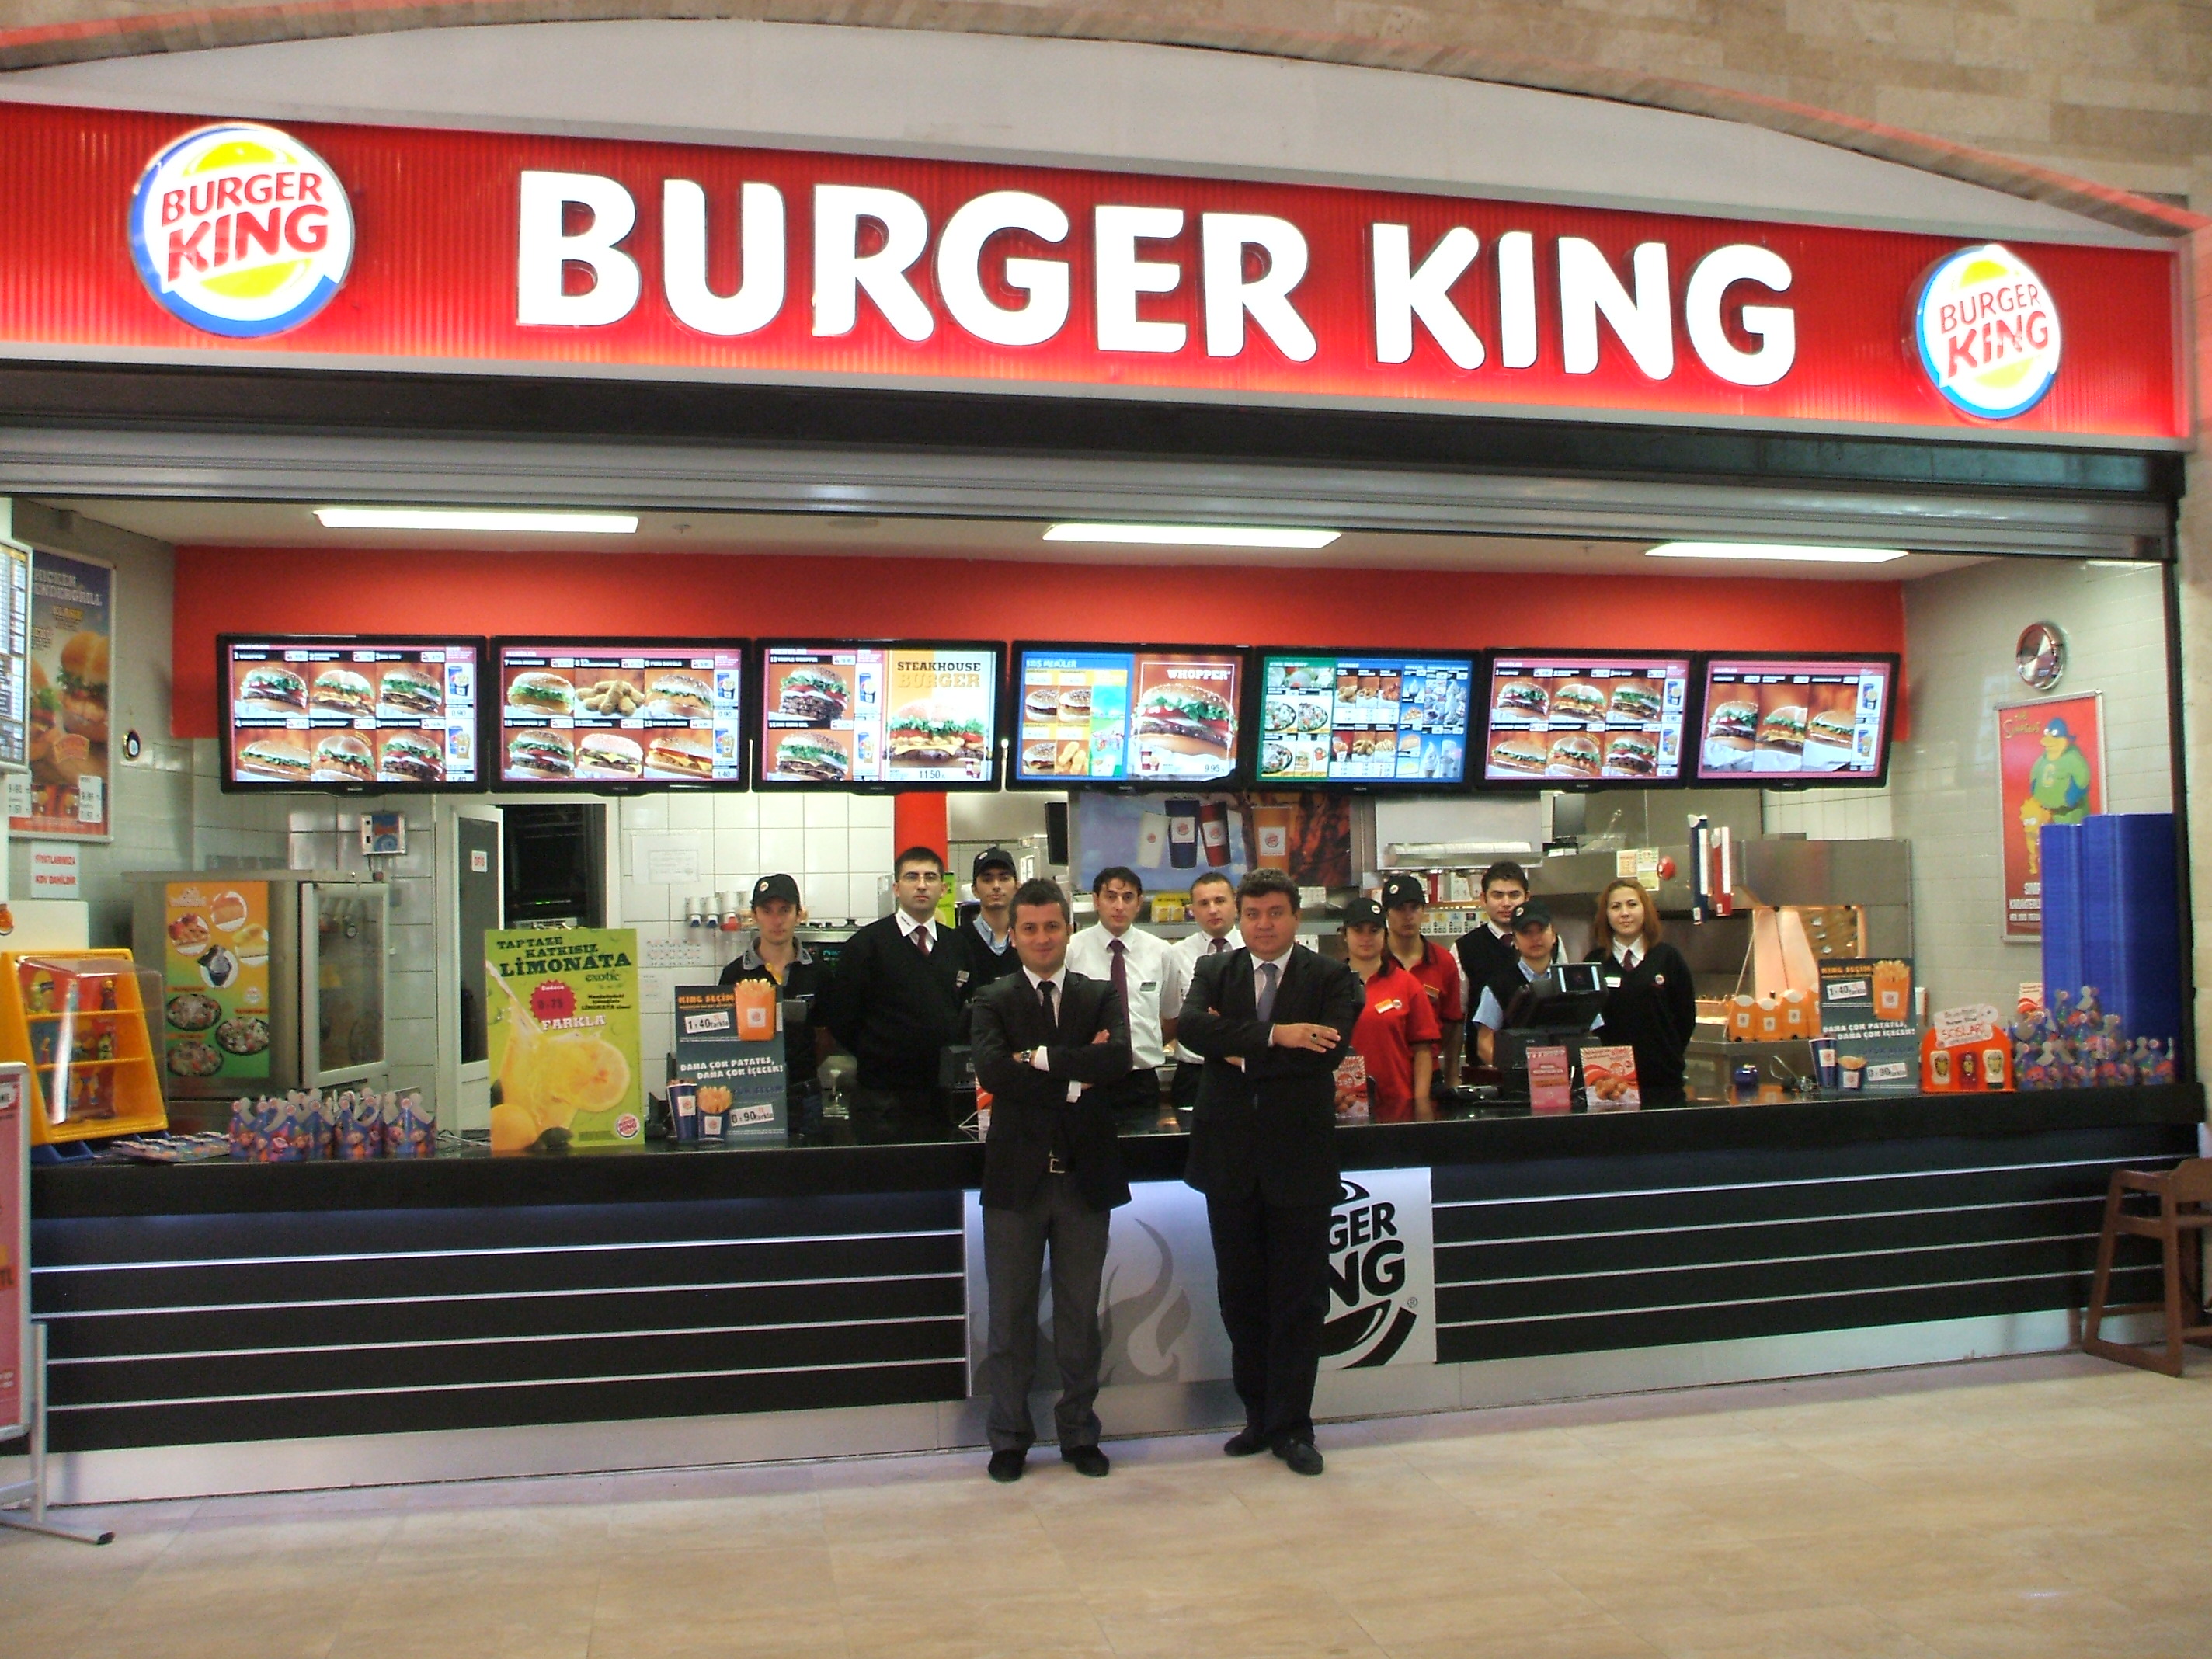 Burger King Image Crazy Gallery